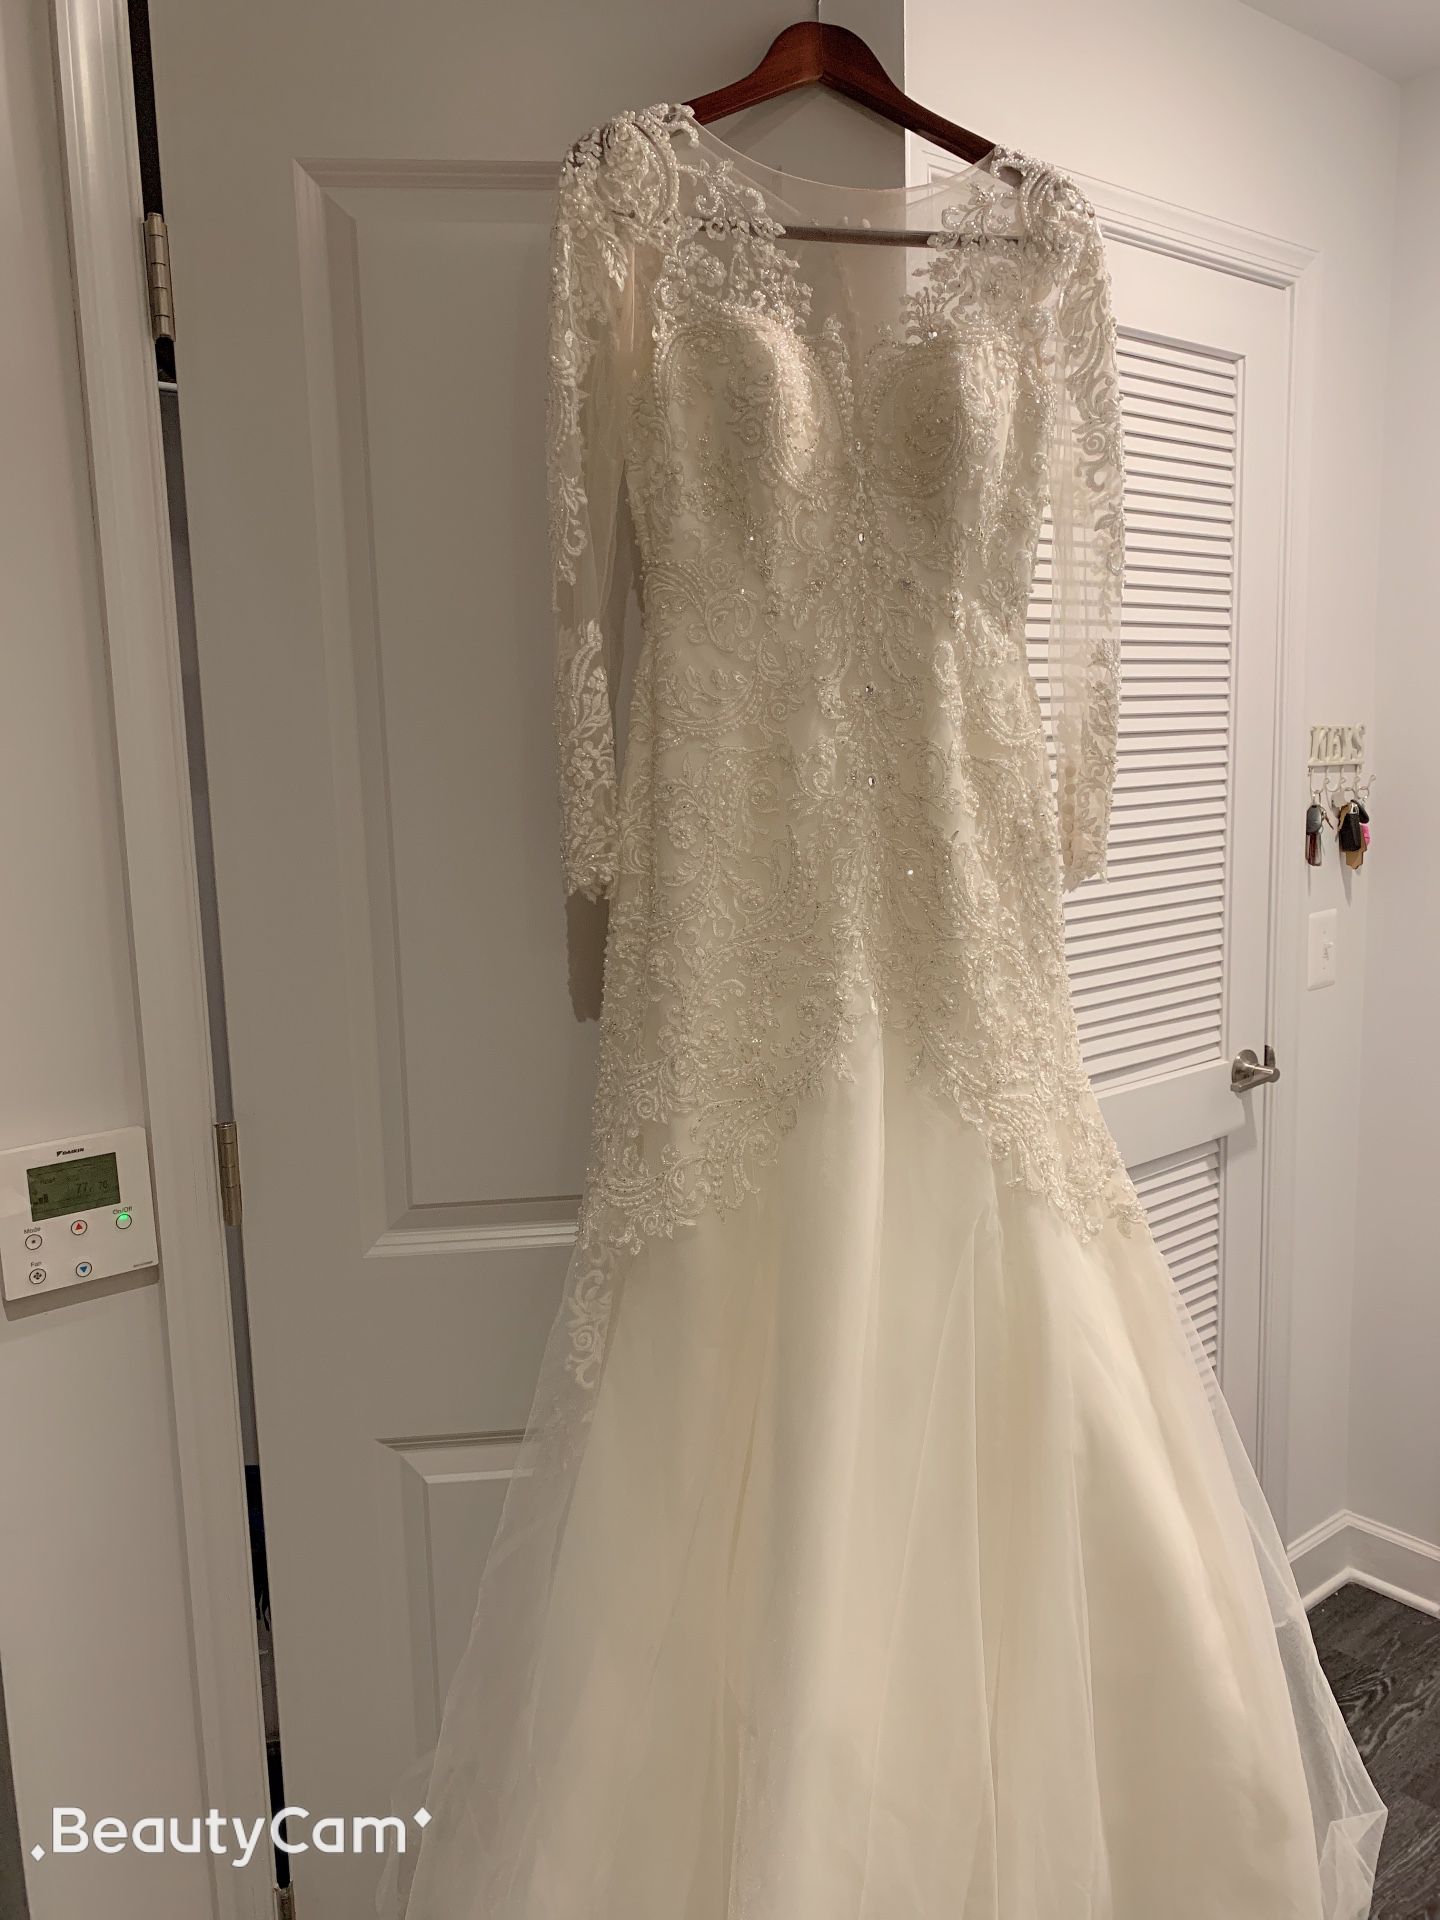 long sleeve Wedding dress Camilla Size 2 tailored to size O $1500 dollars originally